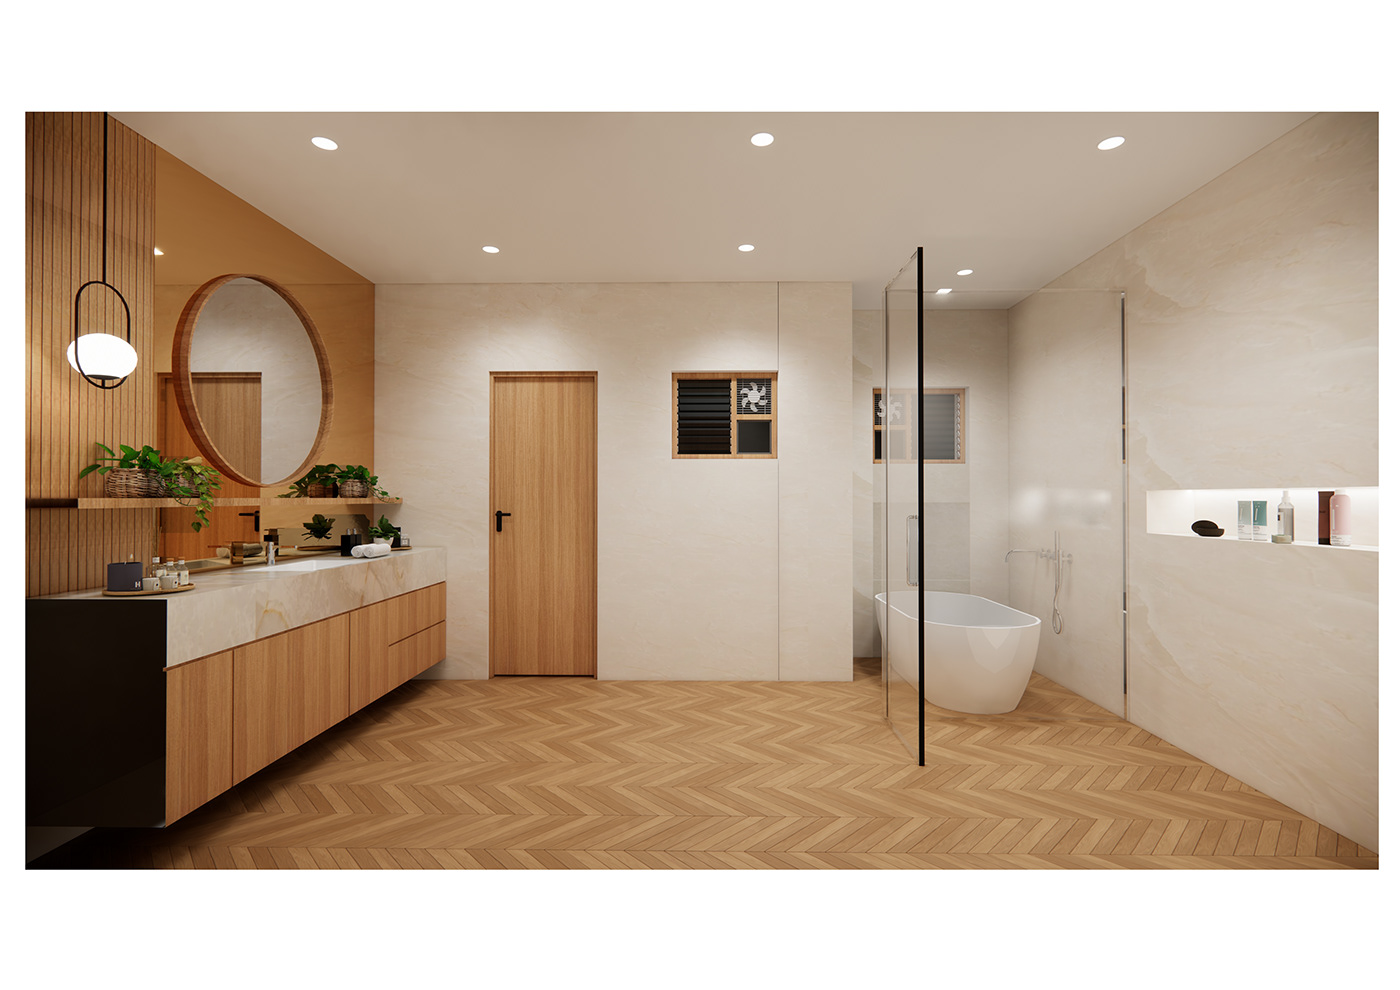 bathroom Render modern visualization SketchUP minimalistic Interior aesthetic Endscape